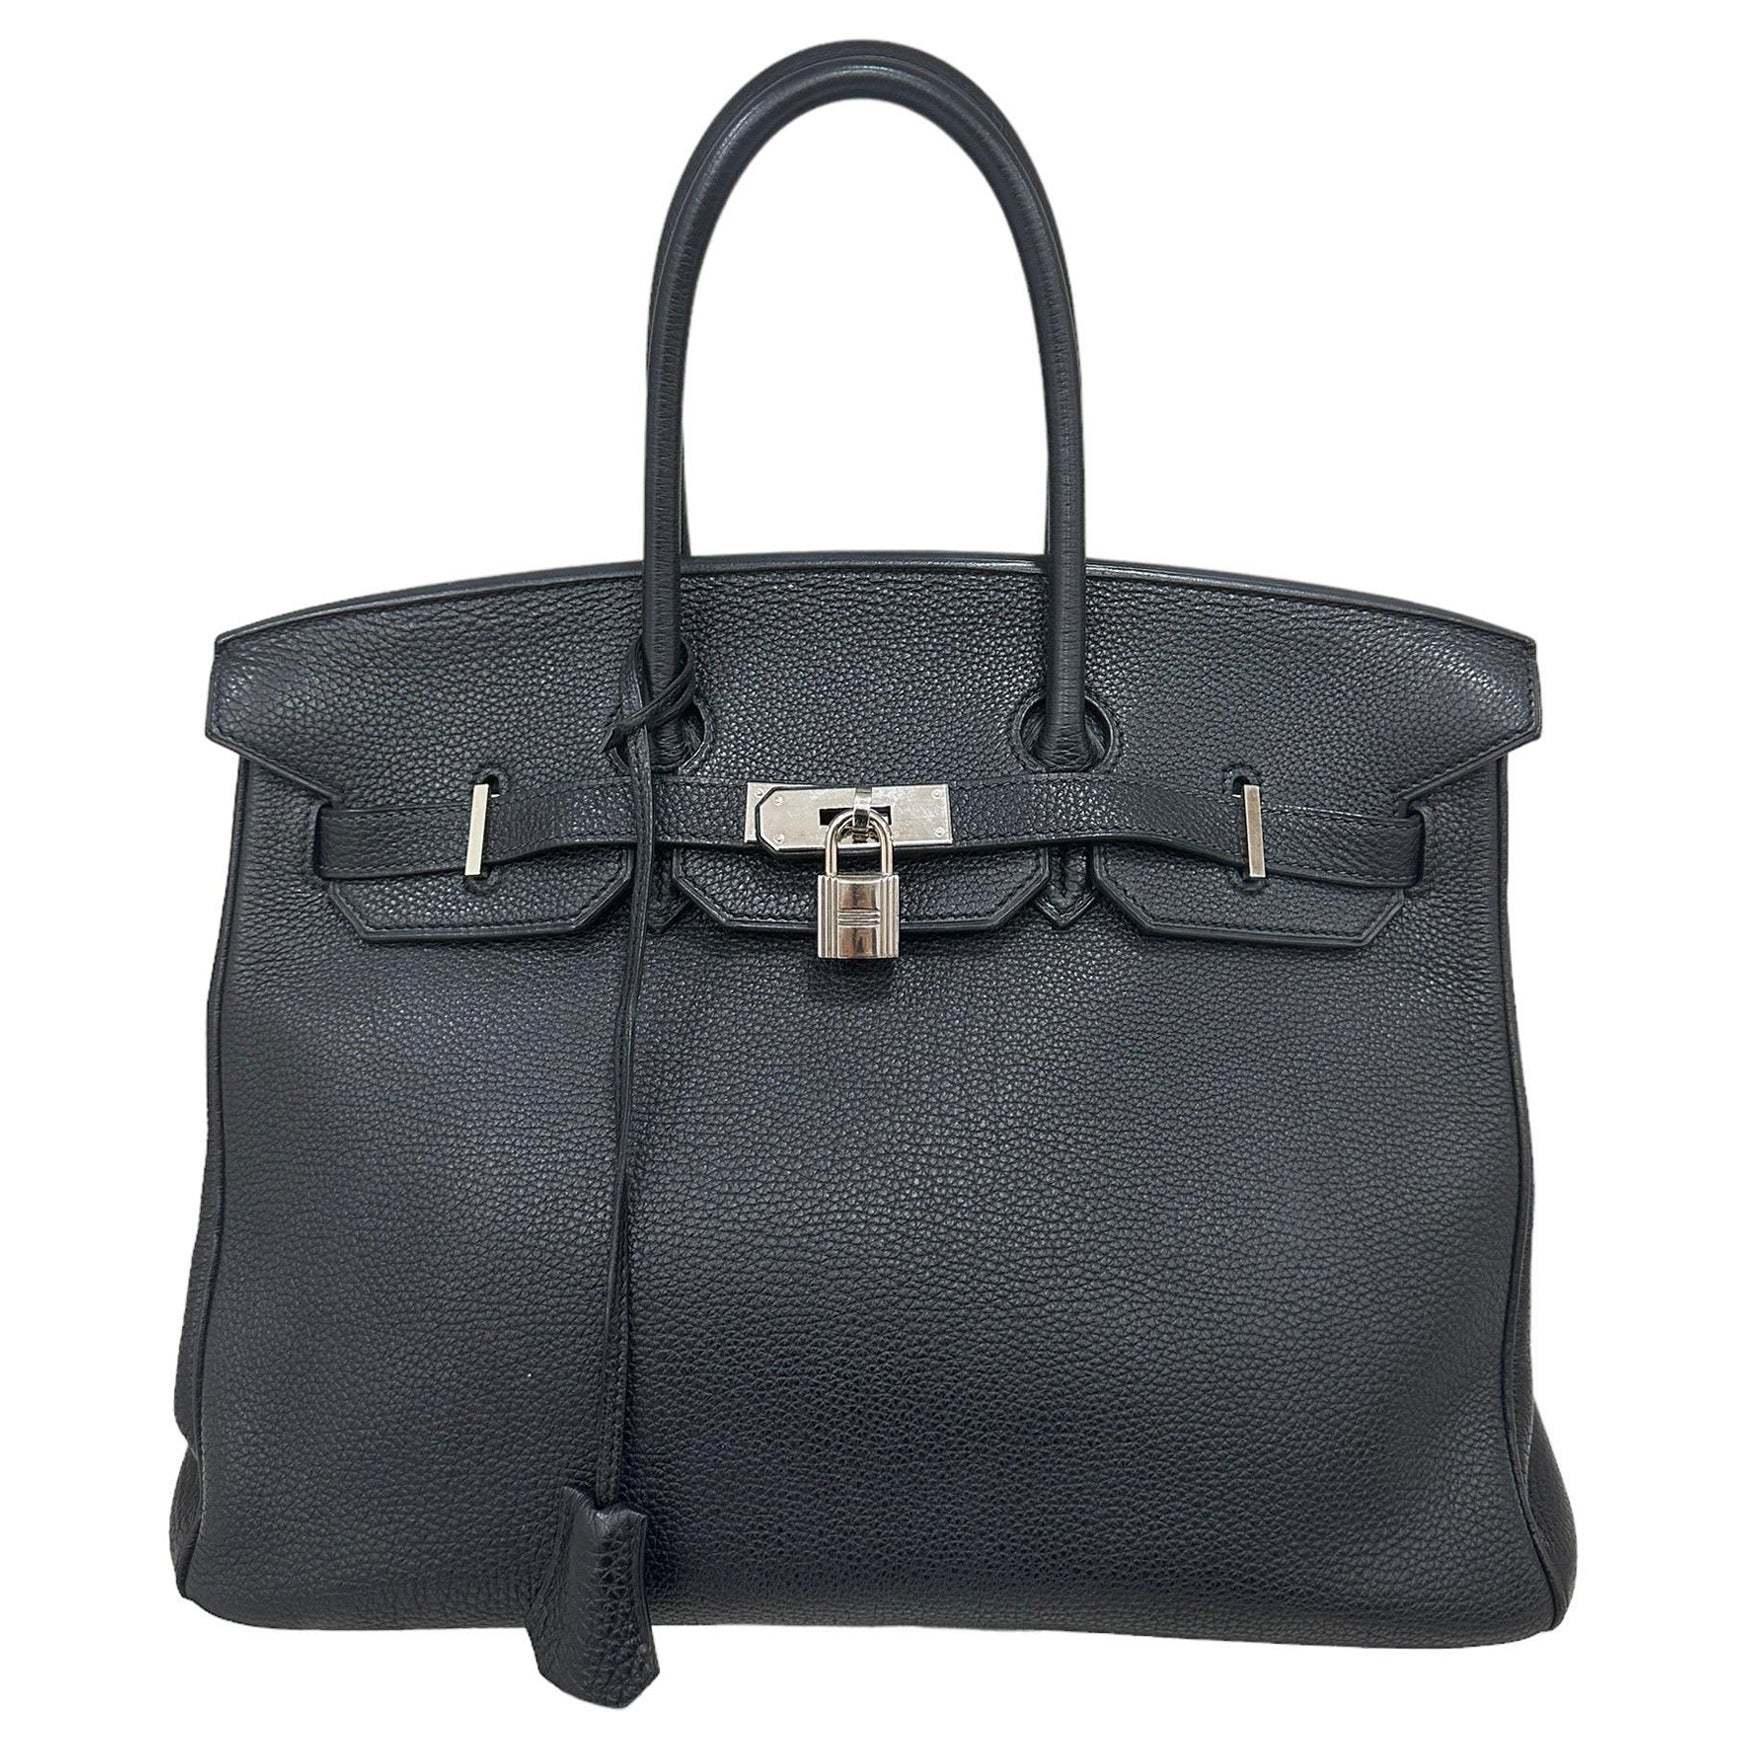 2007 Hermès Birkin Bag Togo Leather Plomb Top Handle Bag